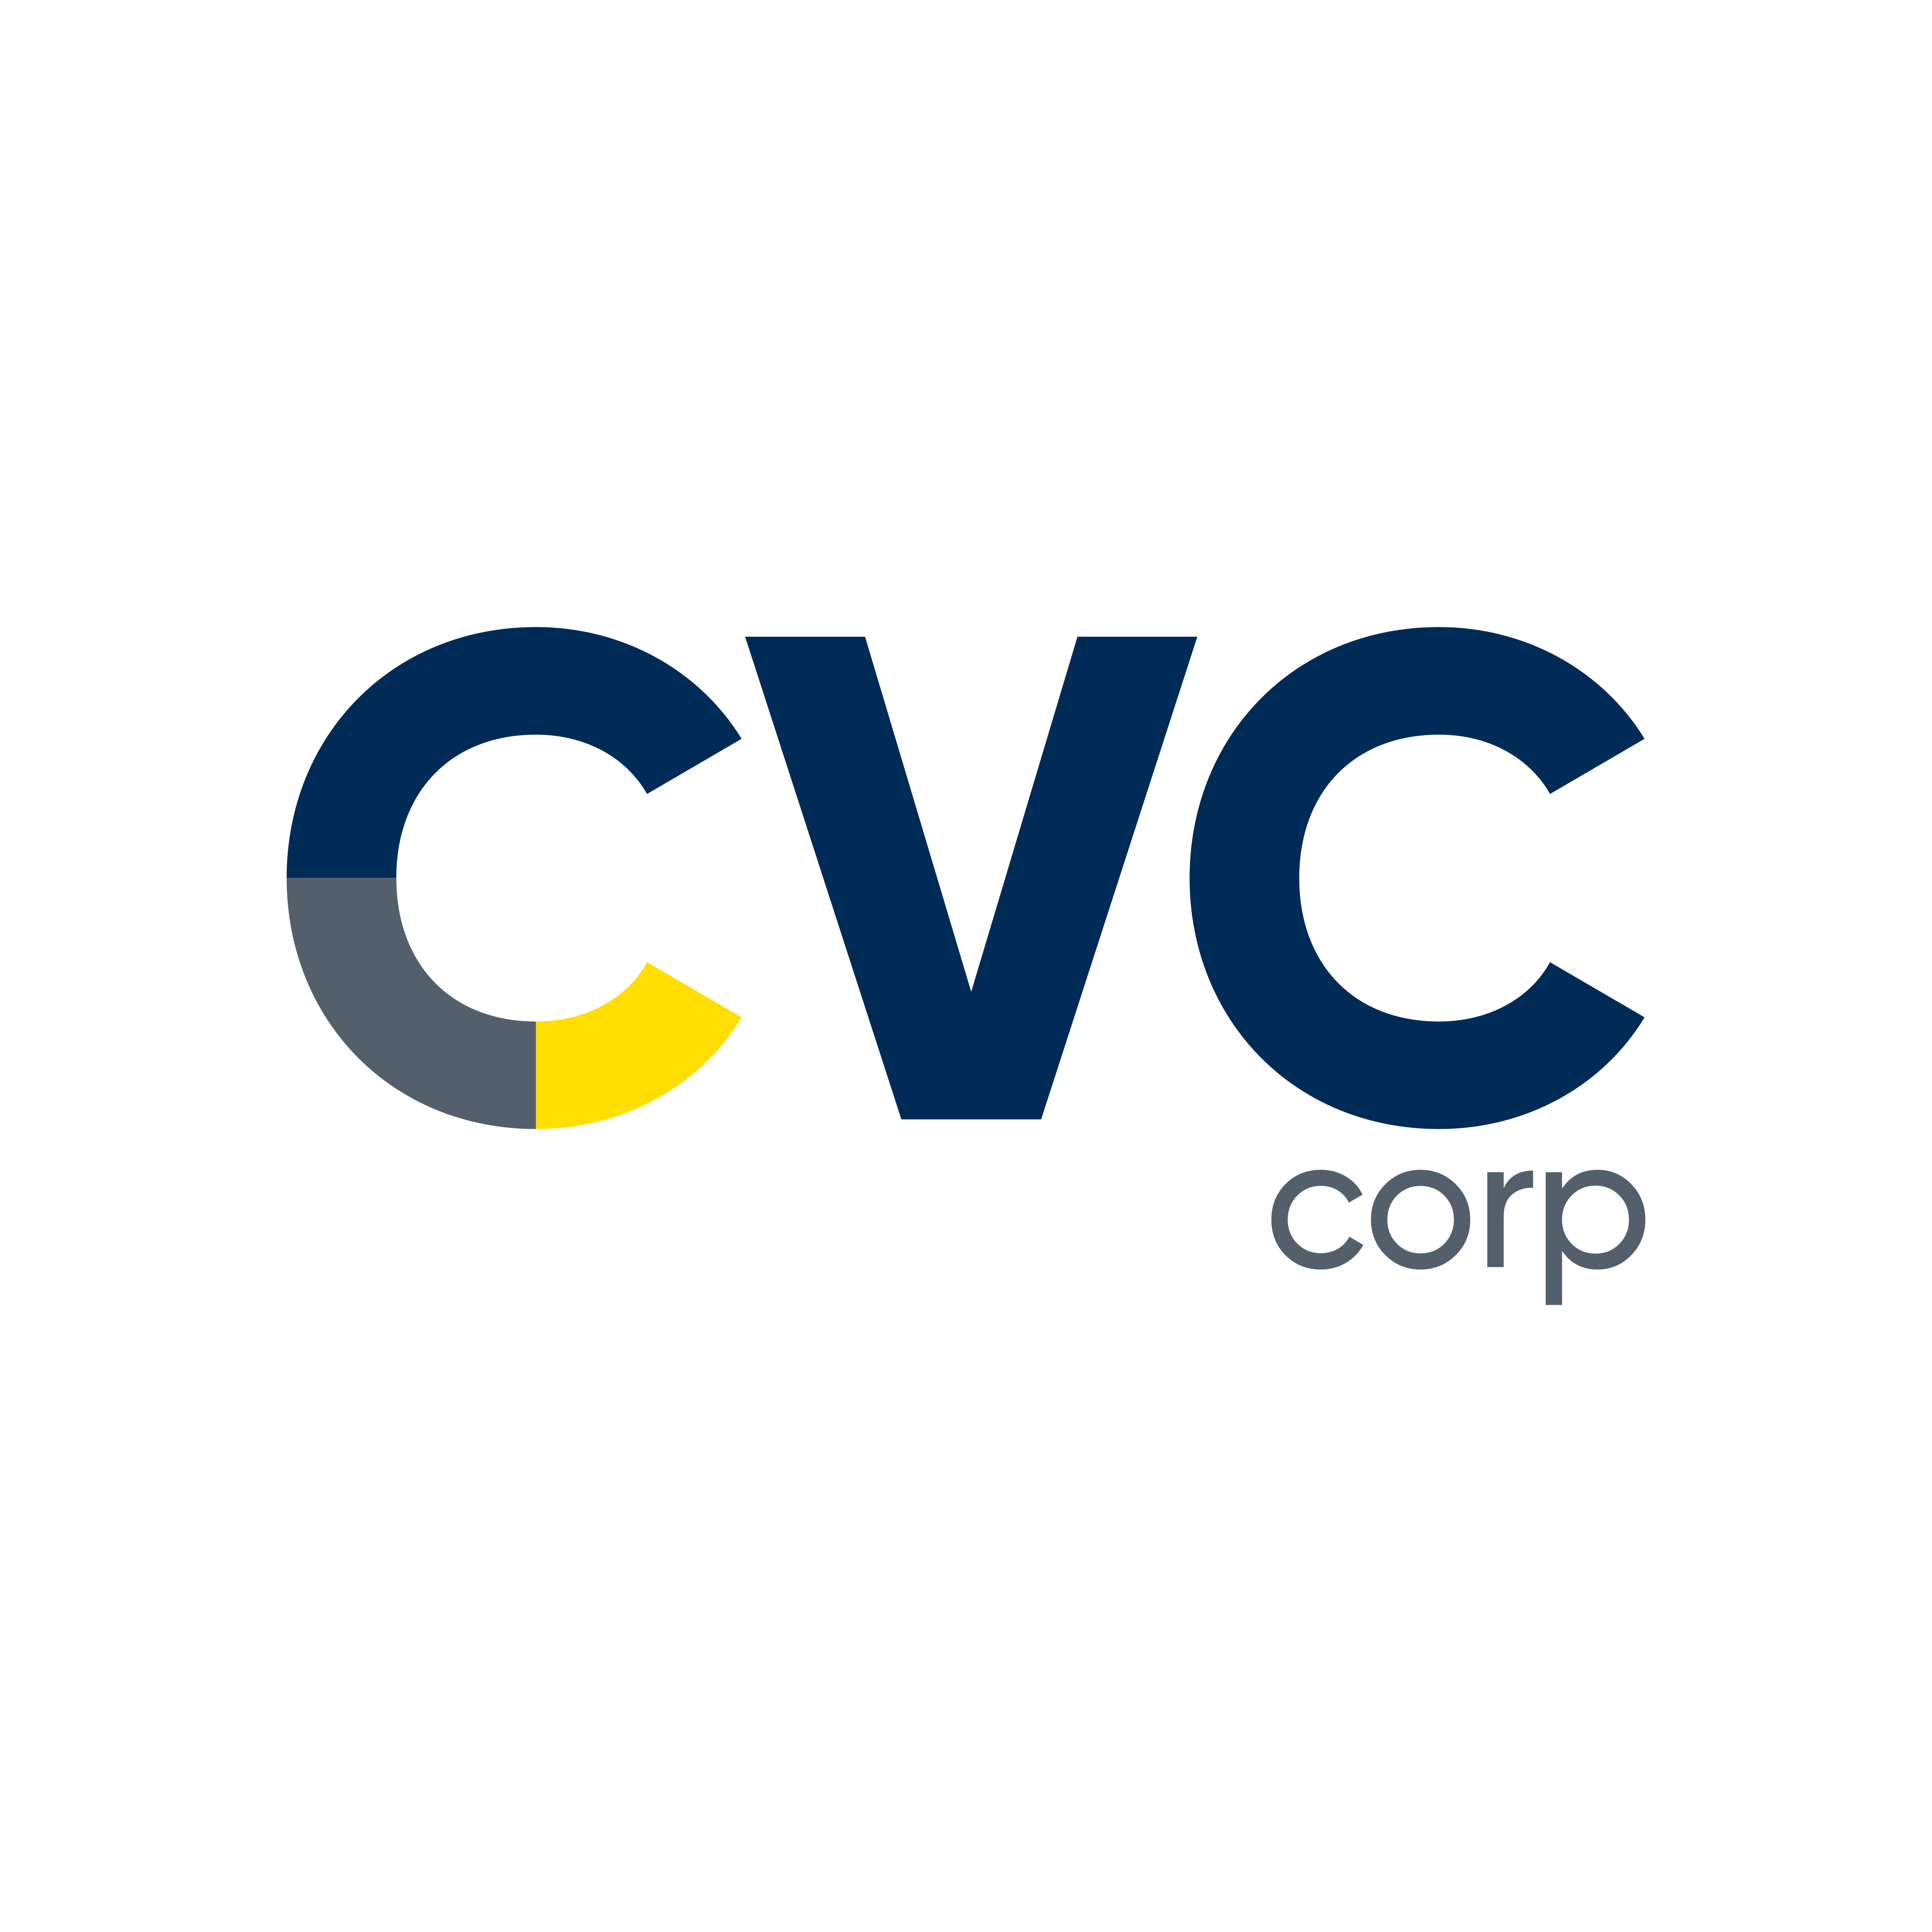 CVC Corp Logo PNG.